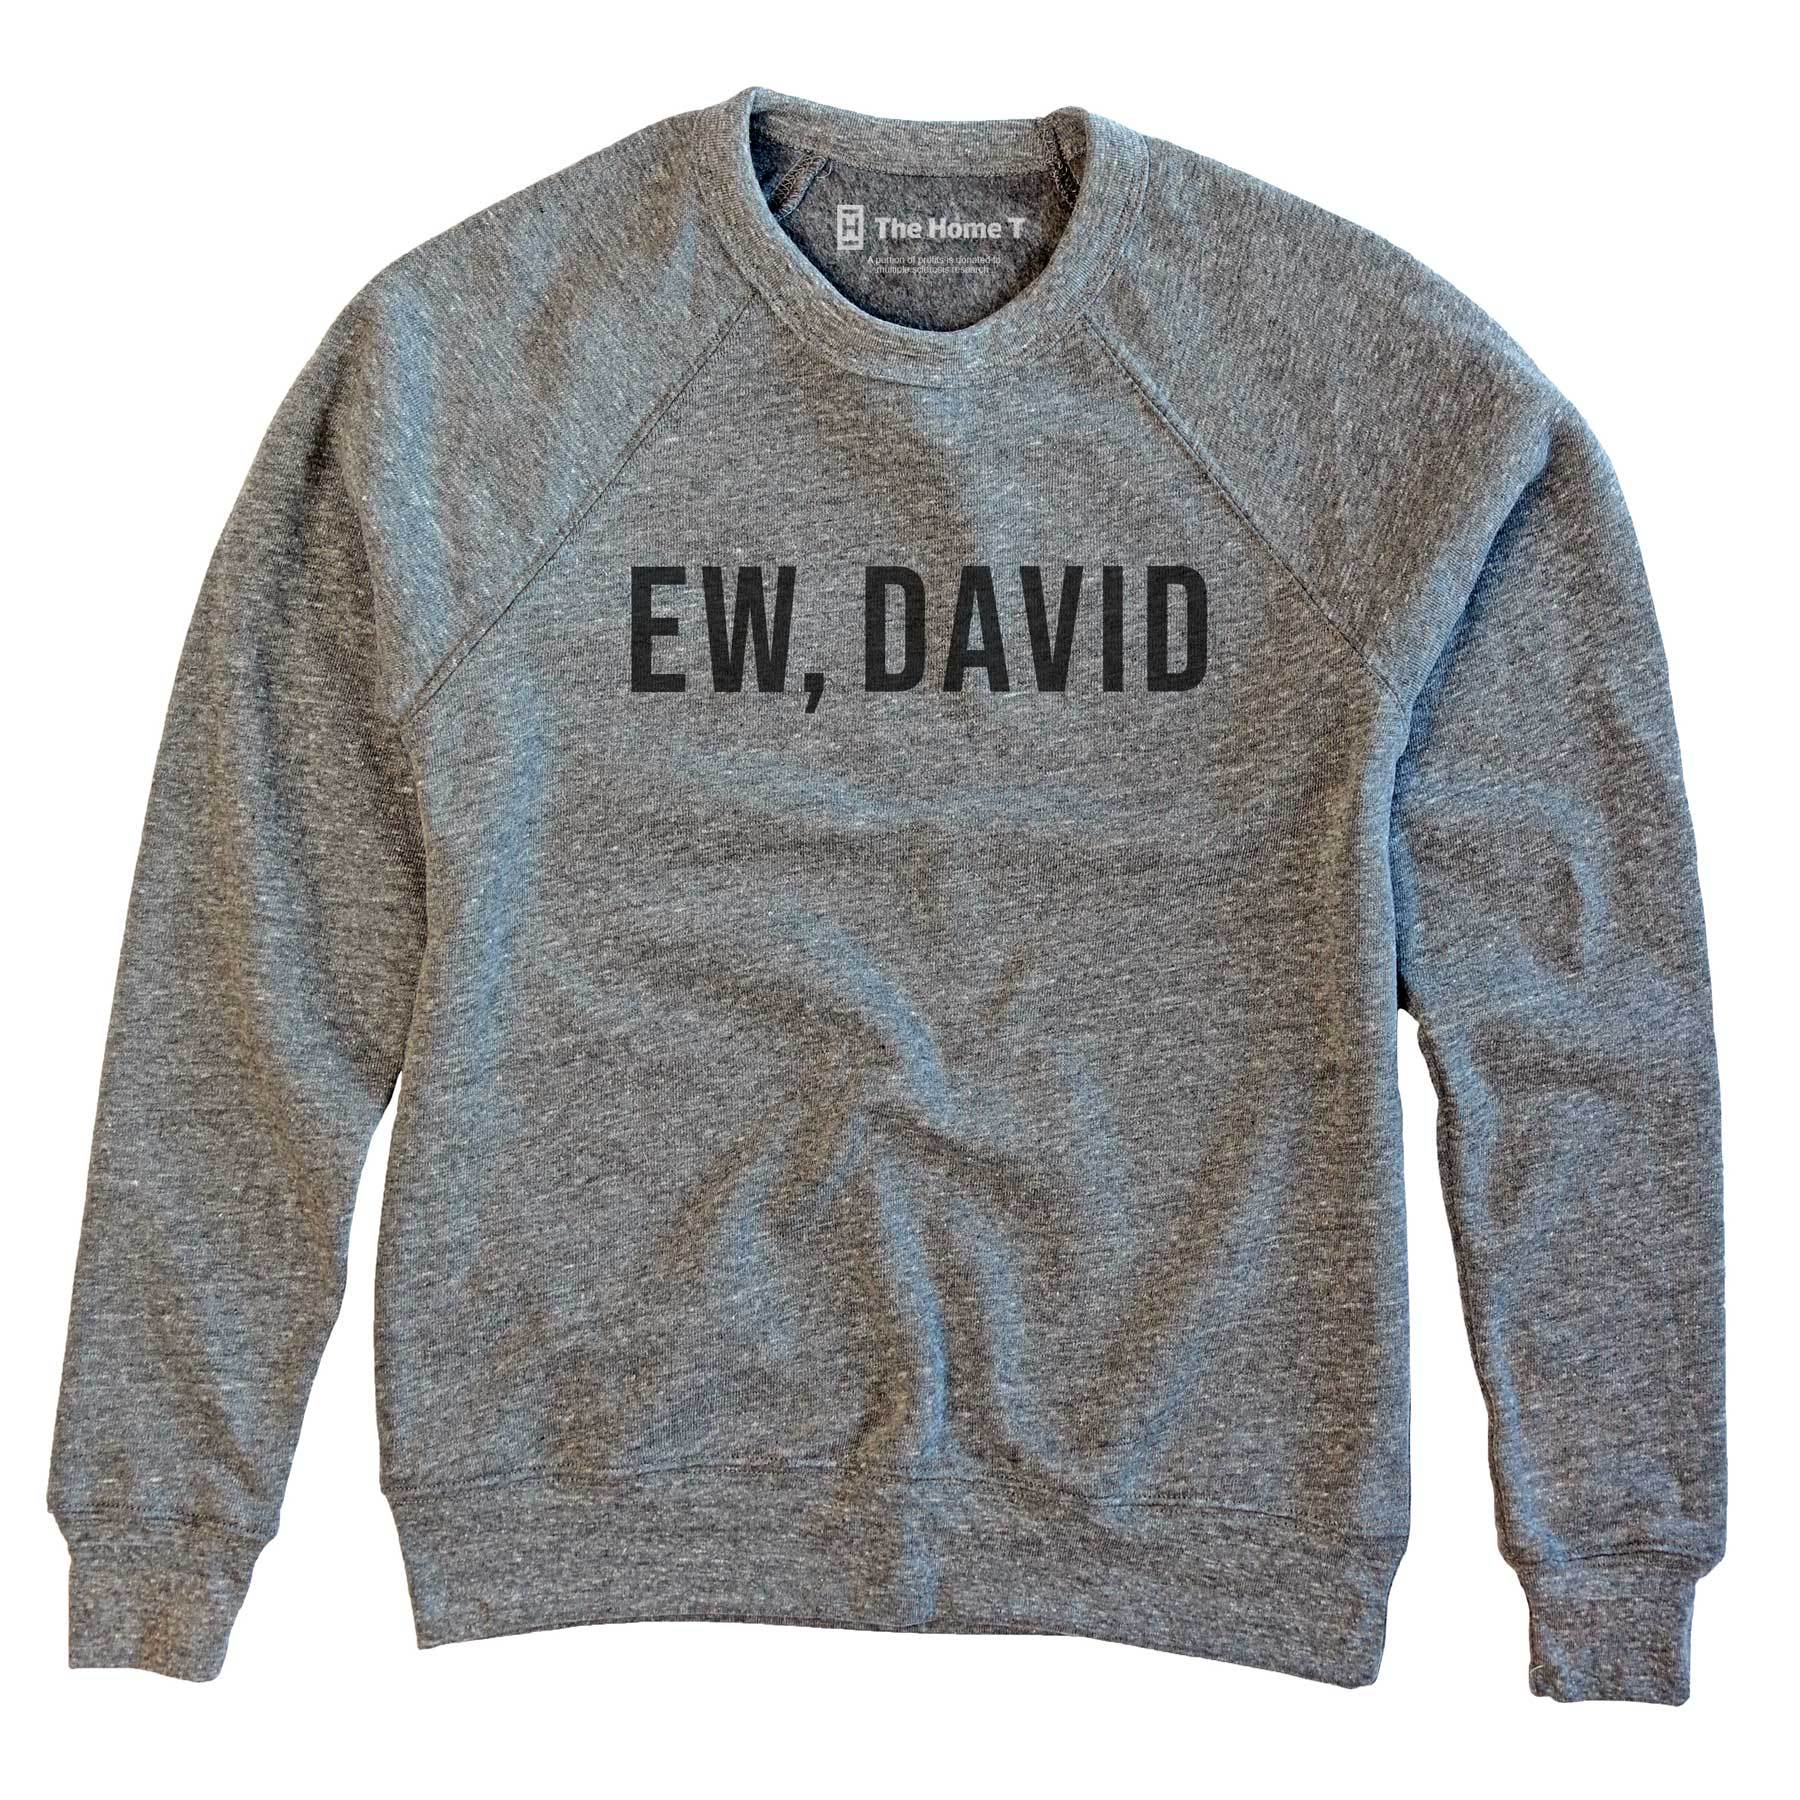 Ew, David. Lifestyle The Home T XS Sweatshirt